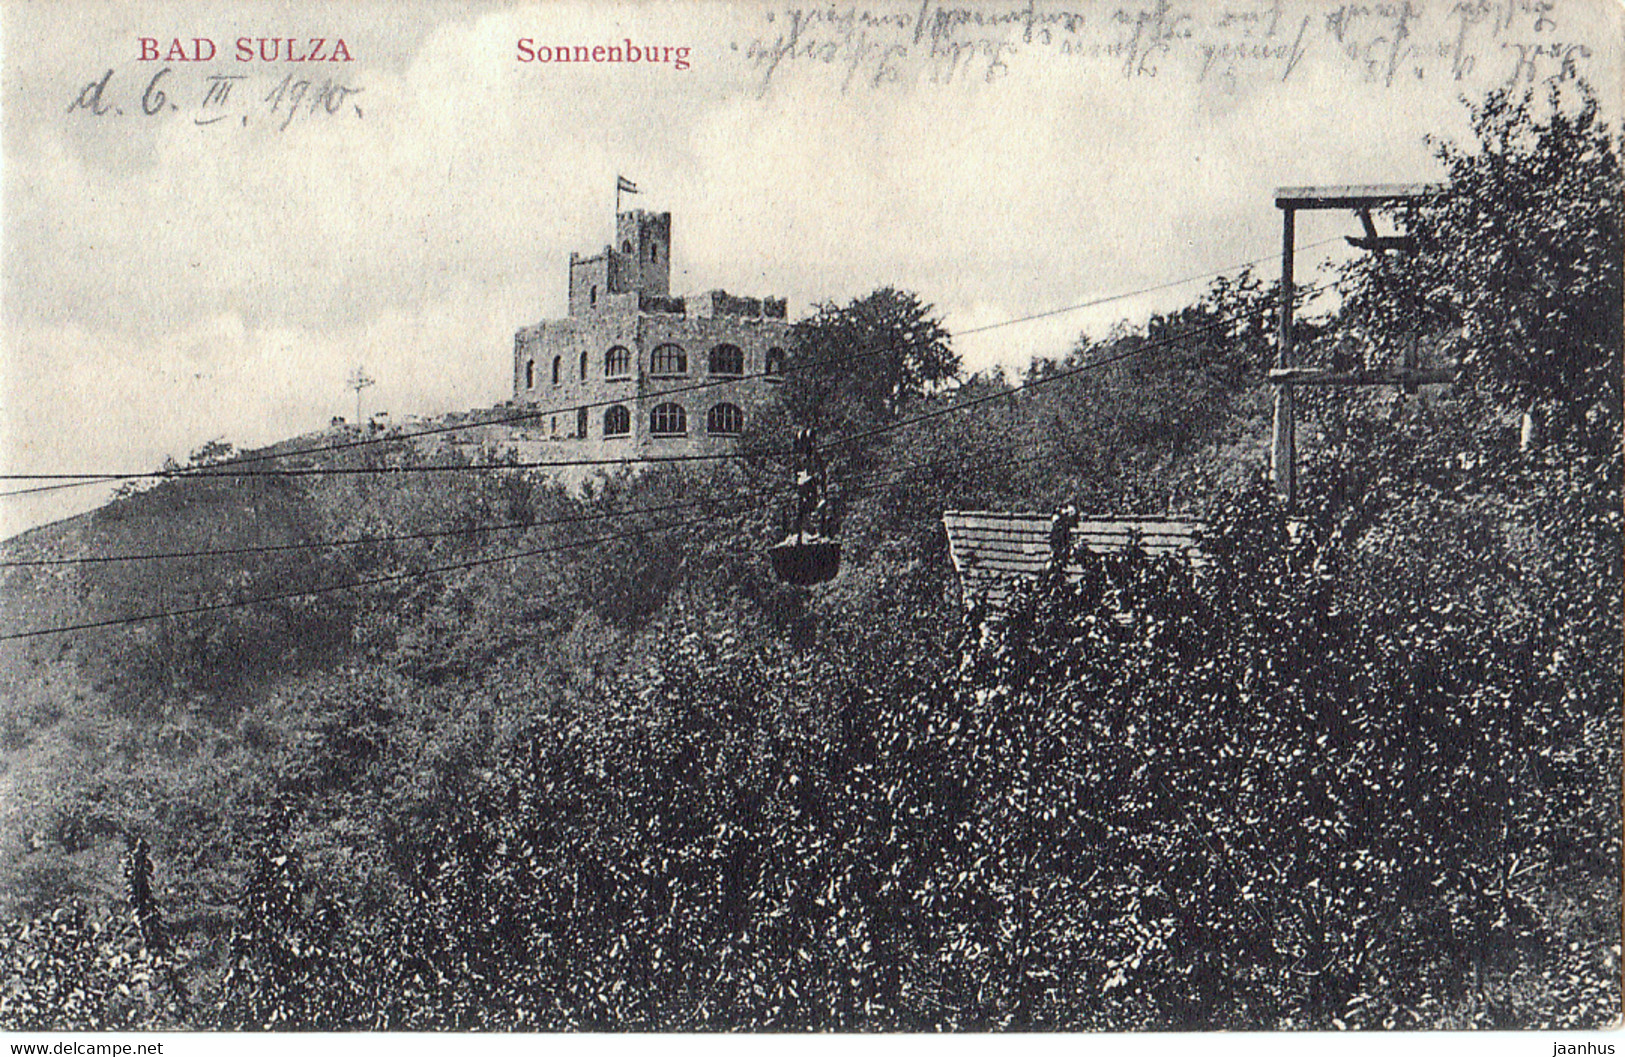 Bad Sulza - Sonnenburg - Old Postcard - 1910 - Germany - Used - Bad Sulza